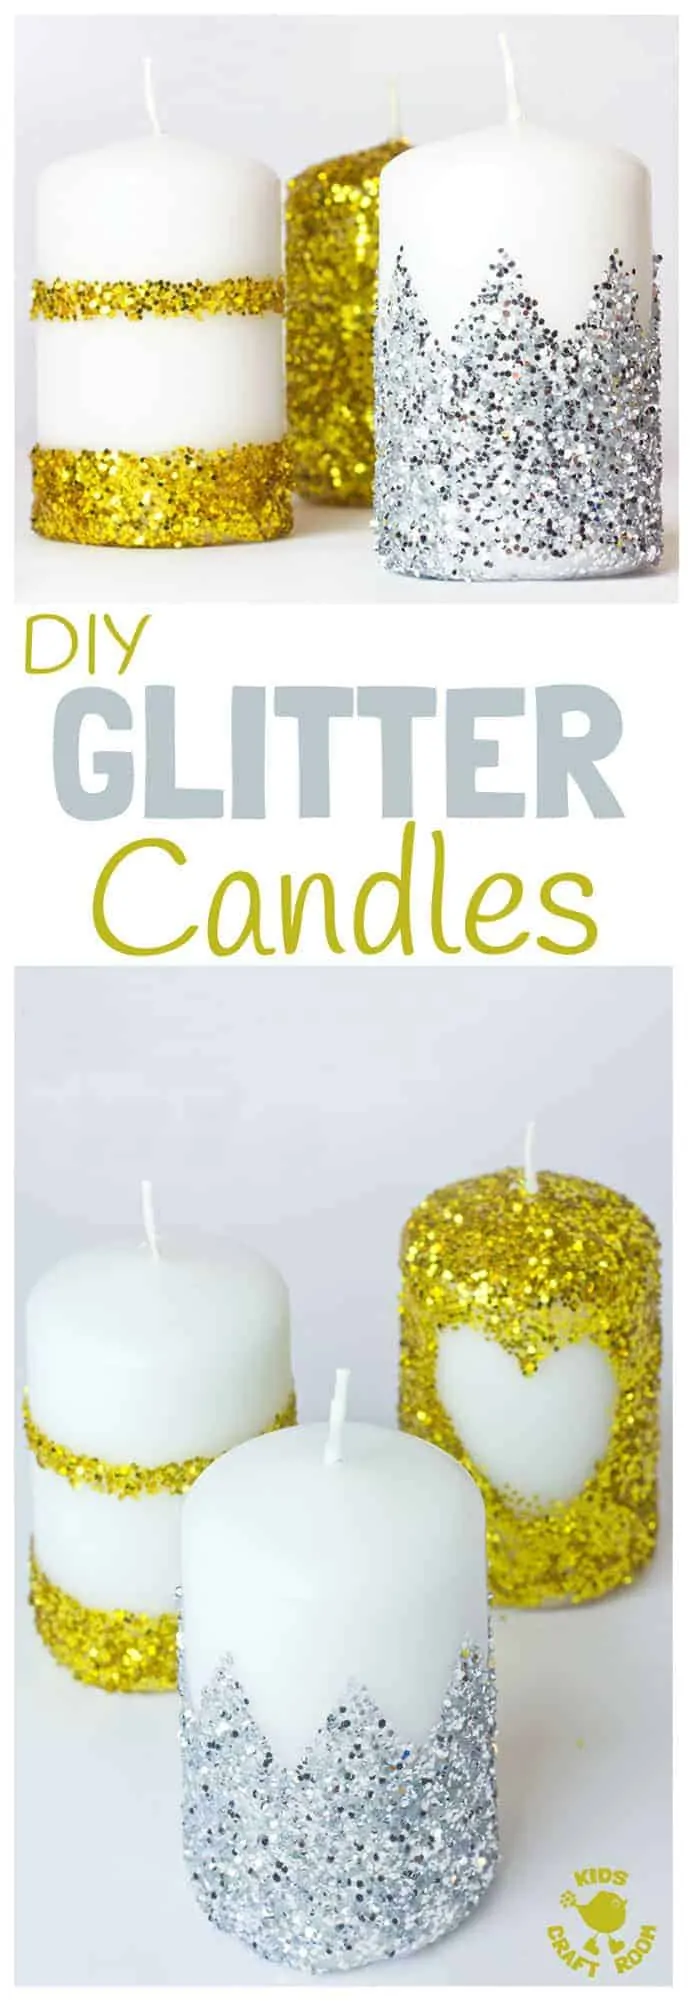 Homemade Gifts - Tin Can Lanterns - Kids Craft Room